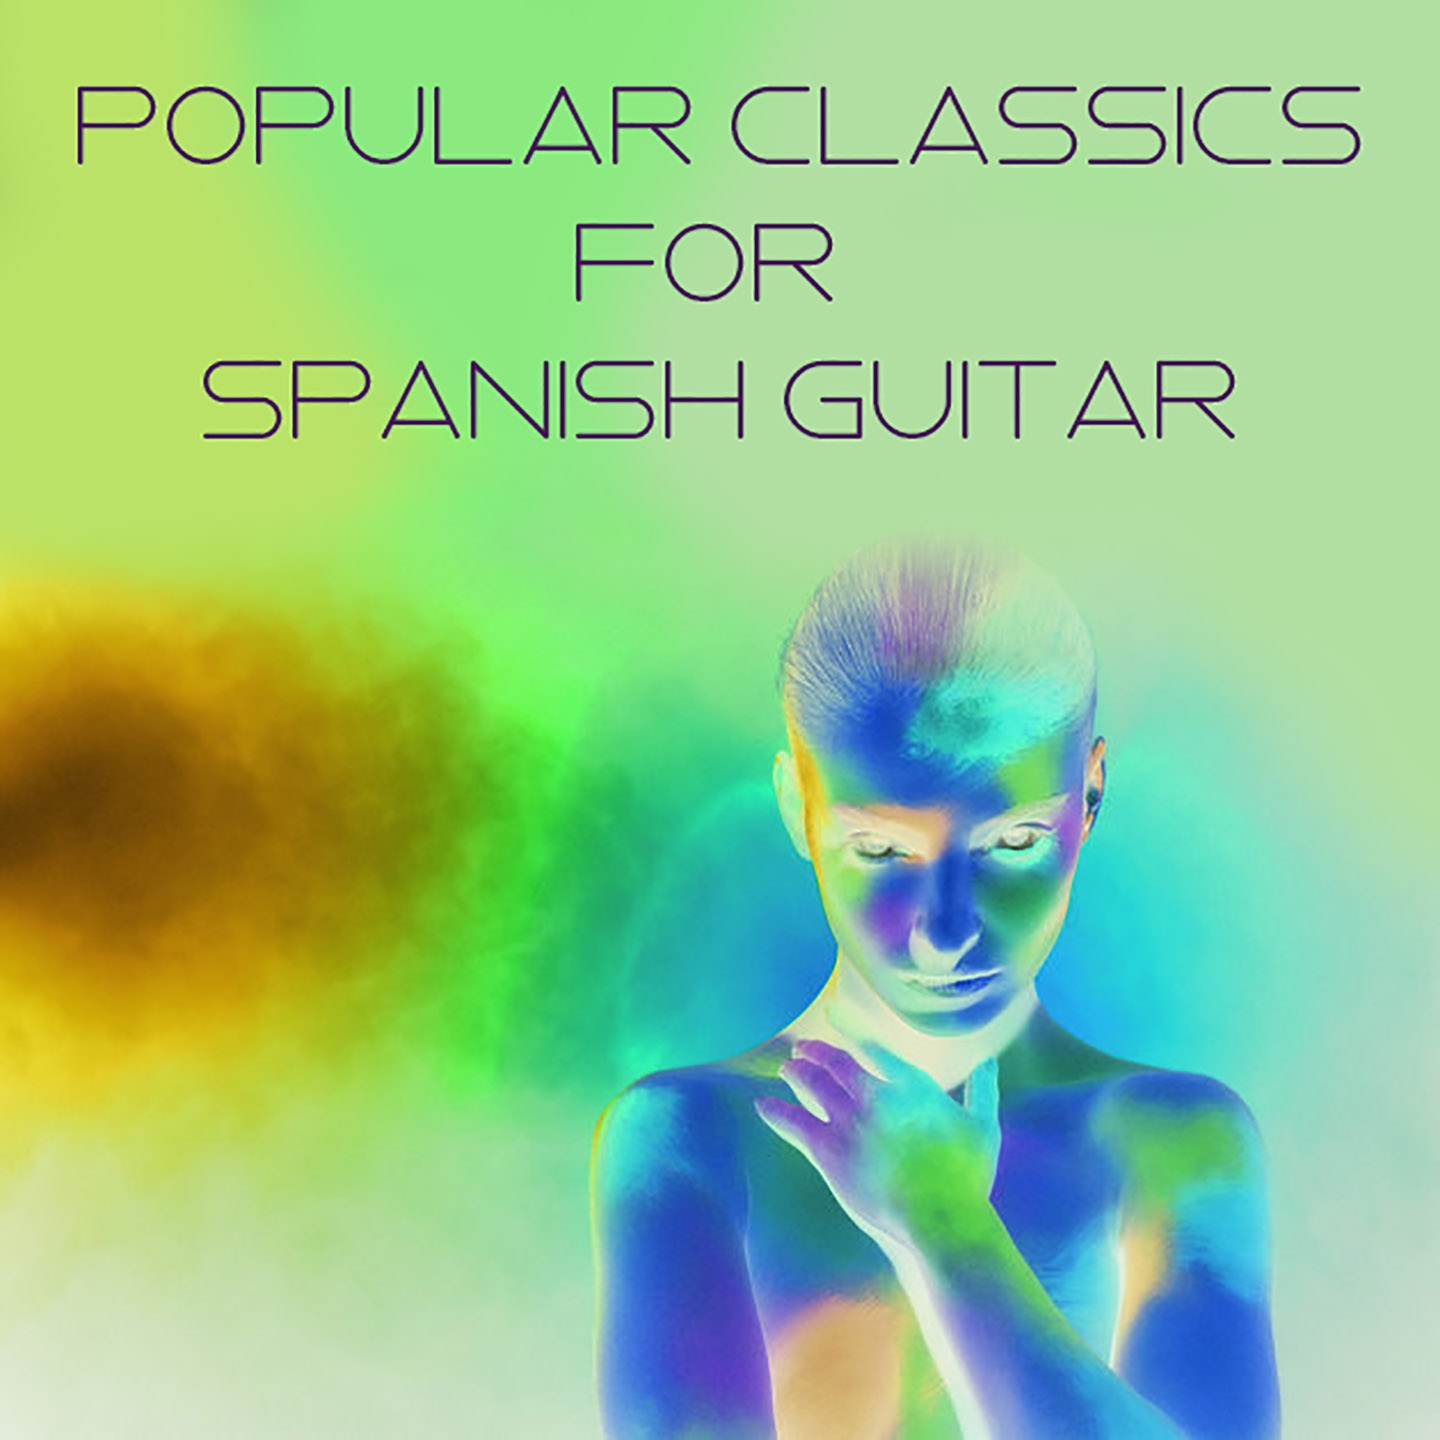 Popular Classics for Spanish Guitar